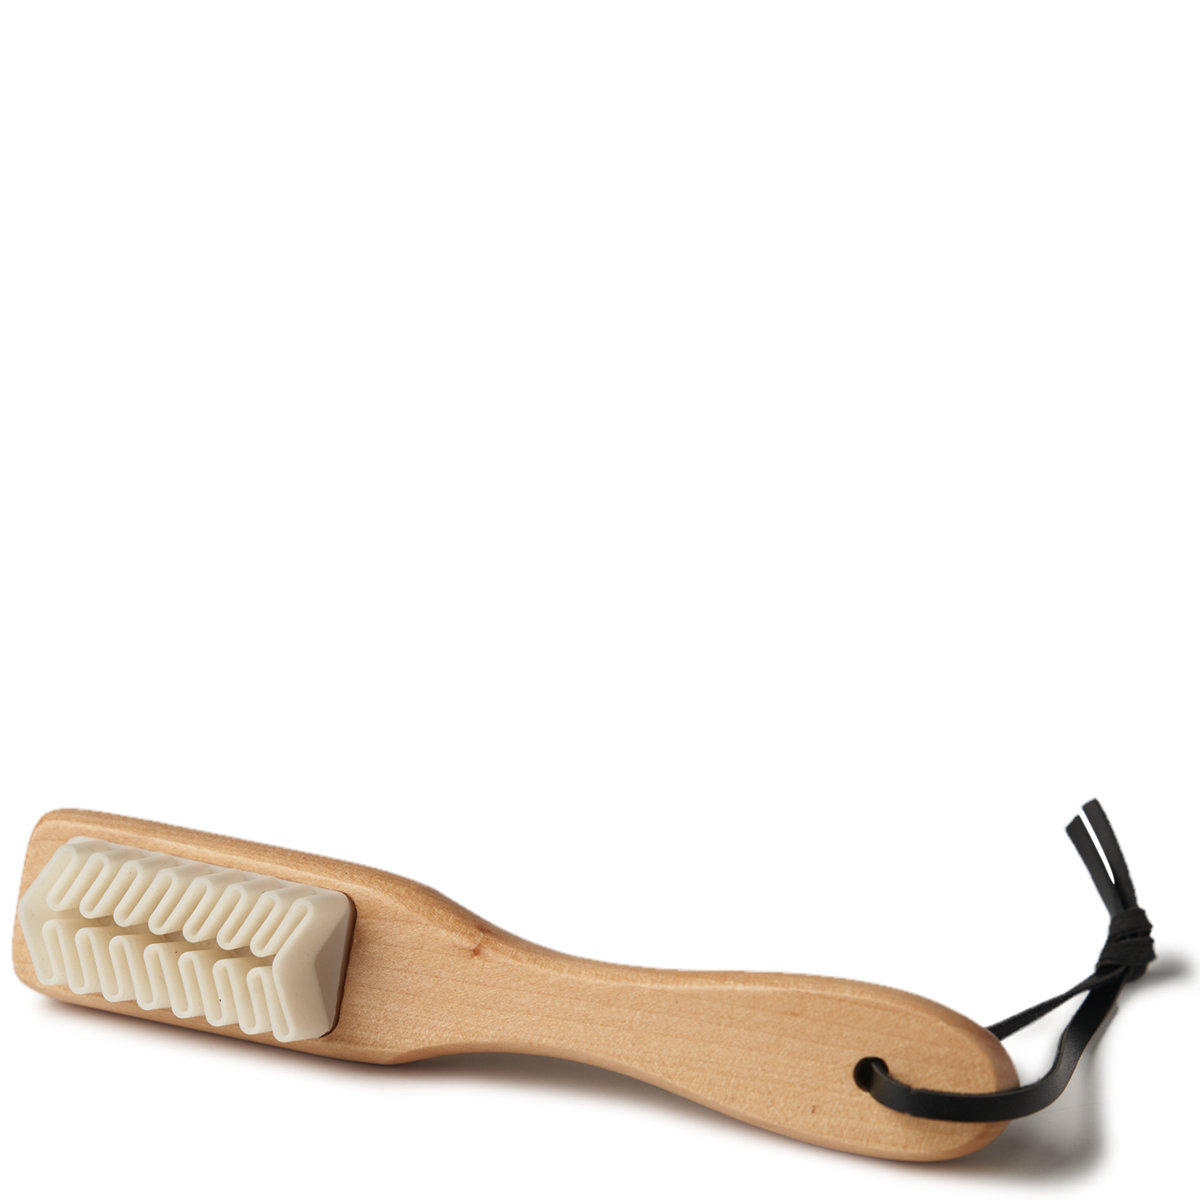 Danner - Cleaning Brush